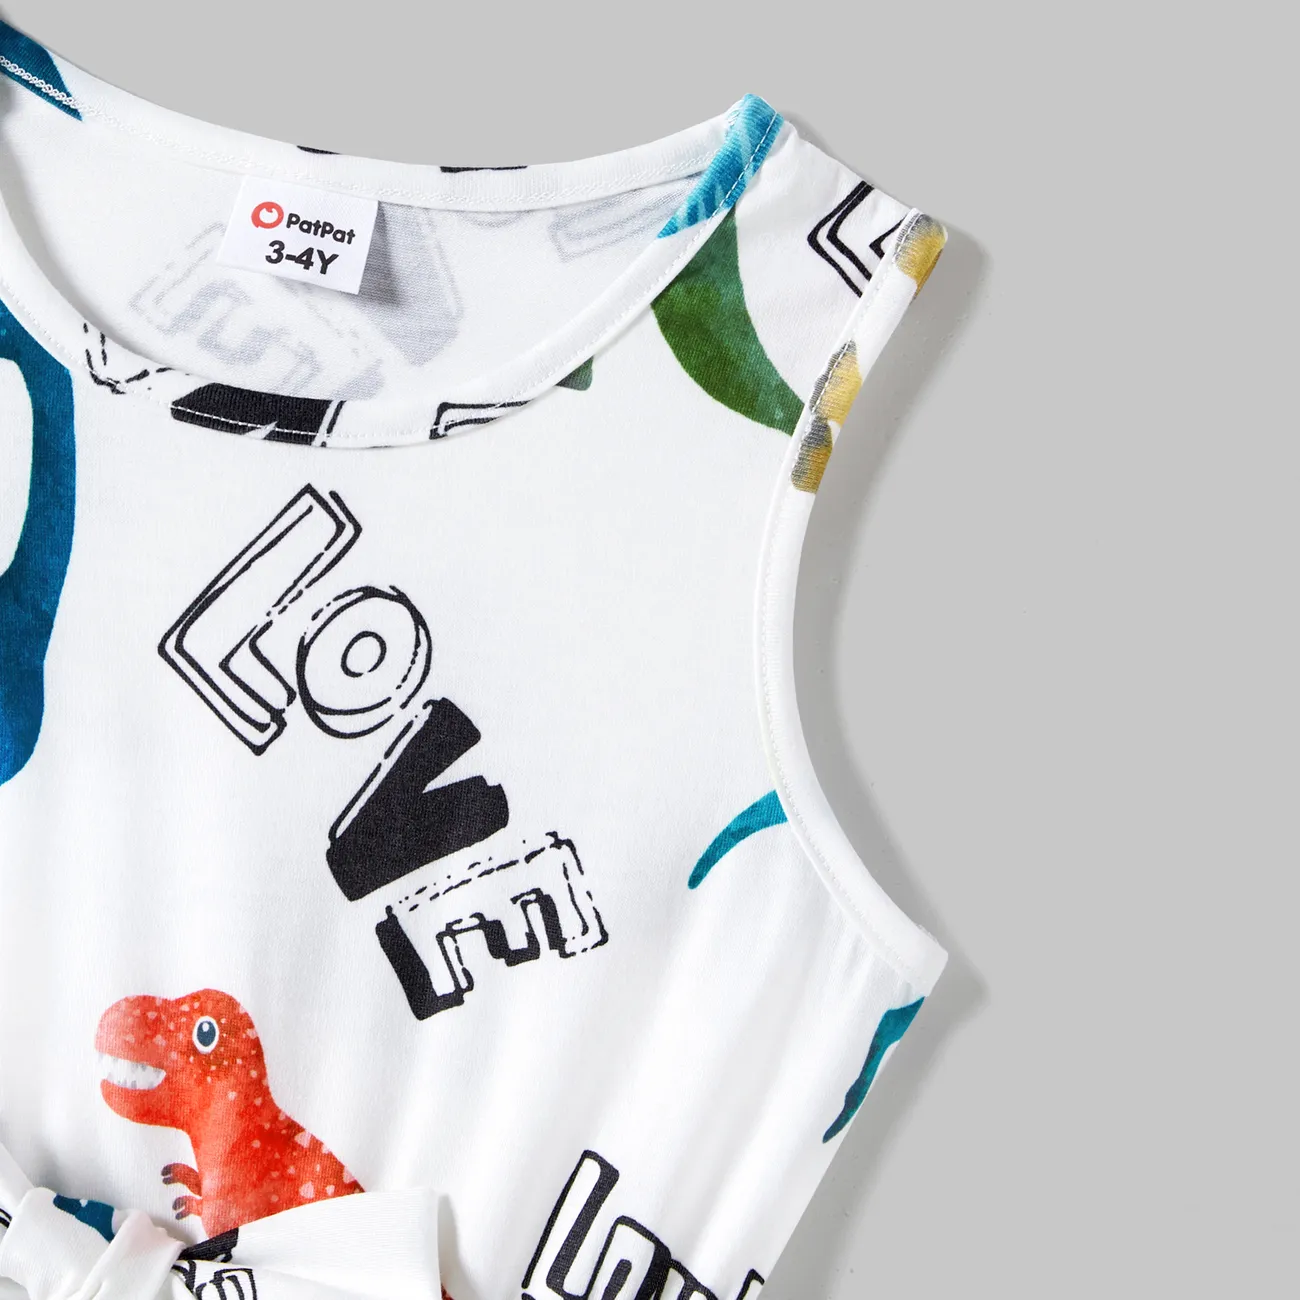 Family Matching Dinosaur Print Tank Dresses and Short-sleeve T-shirts Sets Turquoise big image 1